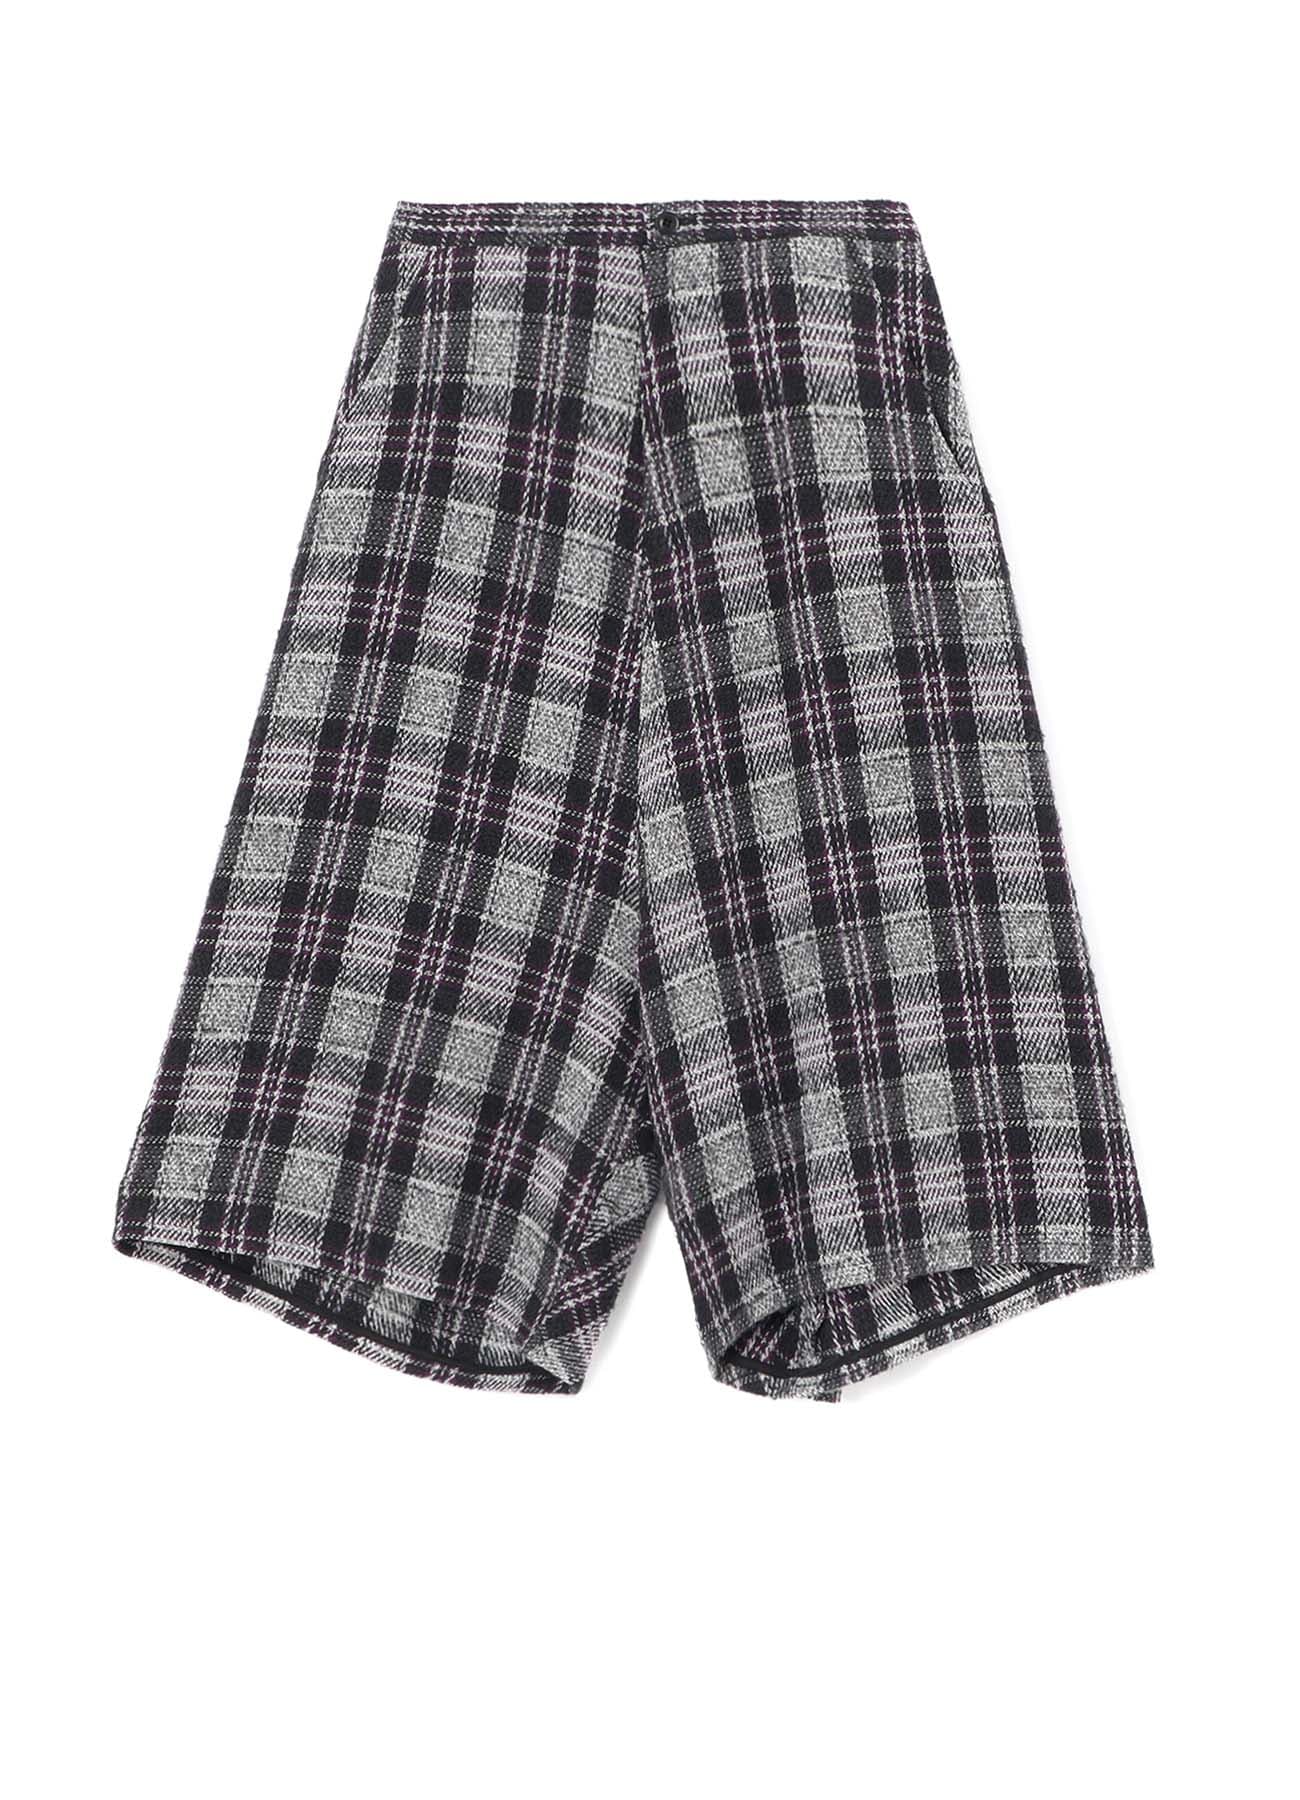 black and white plaid wool shorts